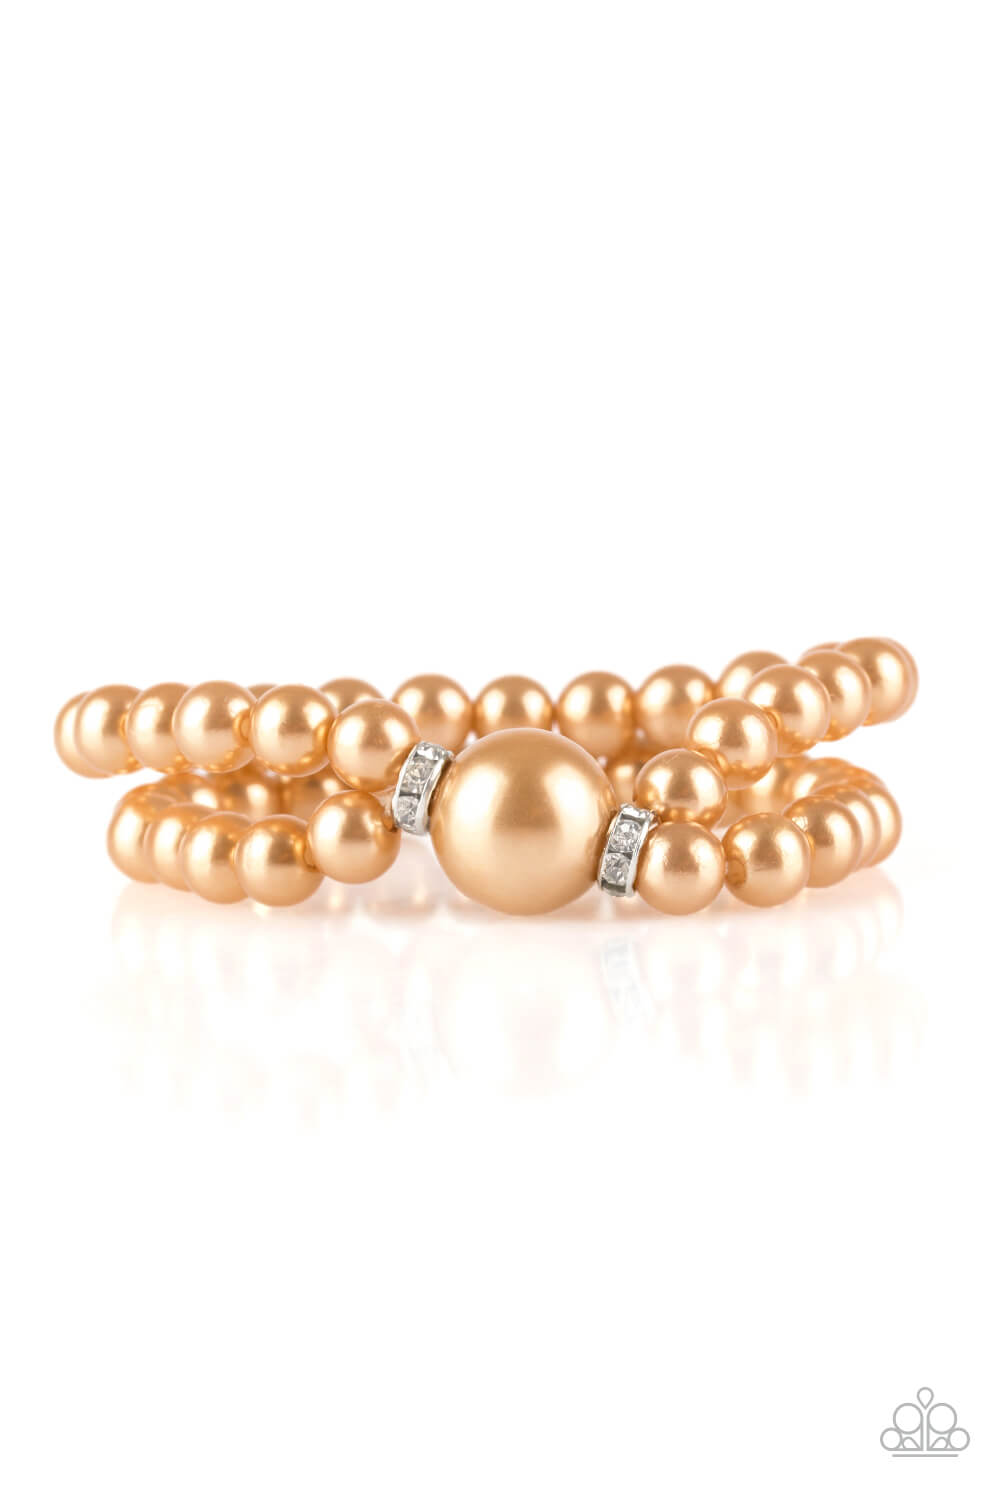 Romantic Redux - Brown Pearl Bracelet - Princess Glam Shop